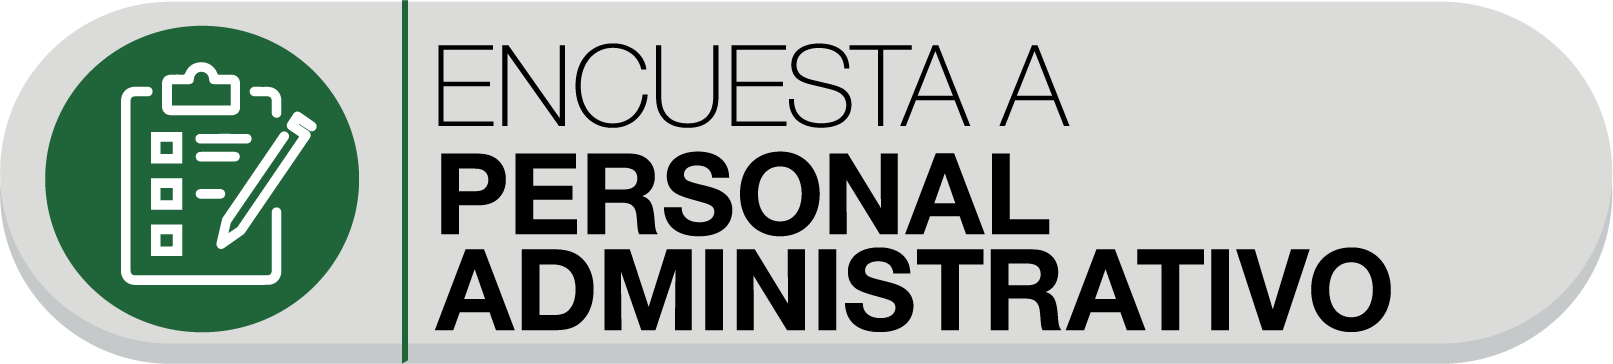 ENCUESTA- A PERSONAL ADMINISTRATIVO 04.png